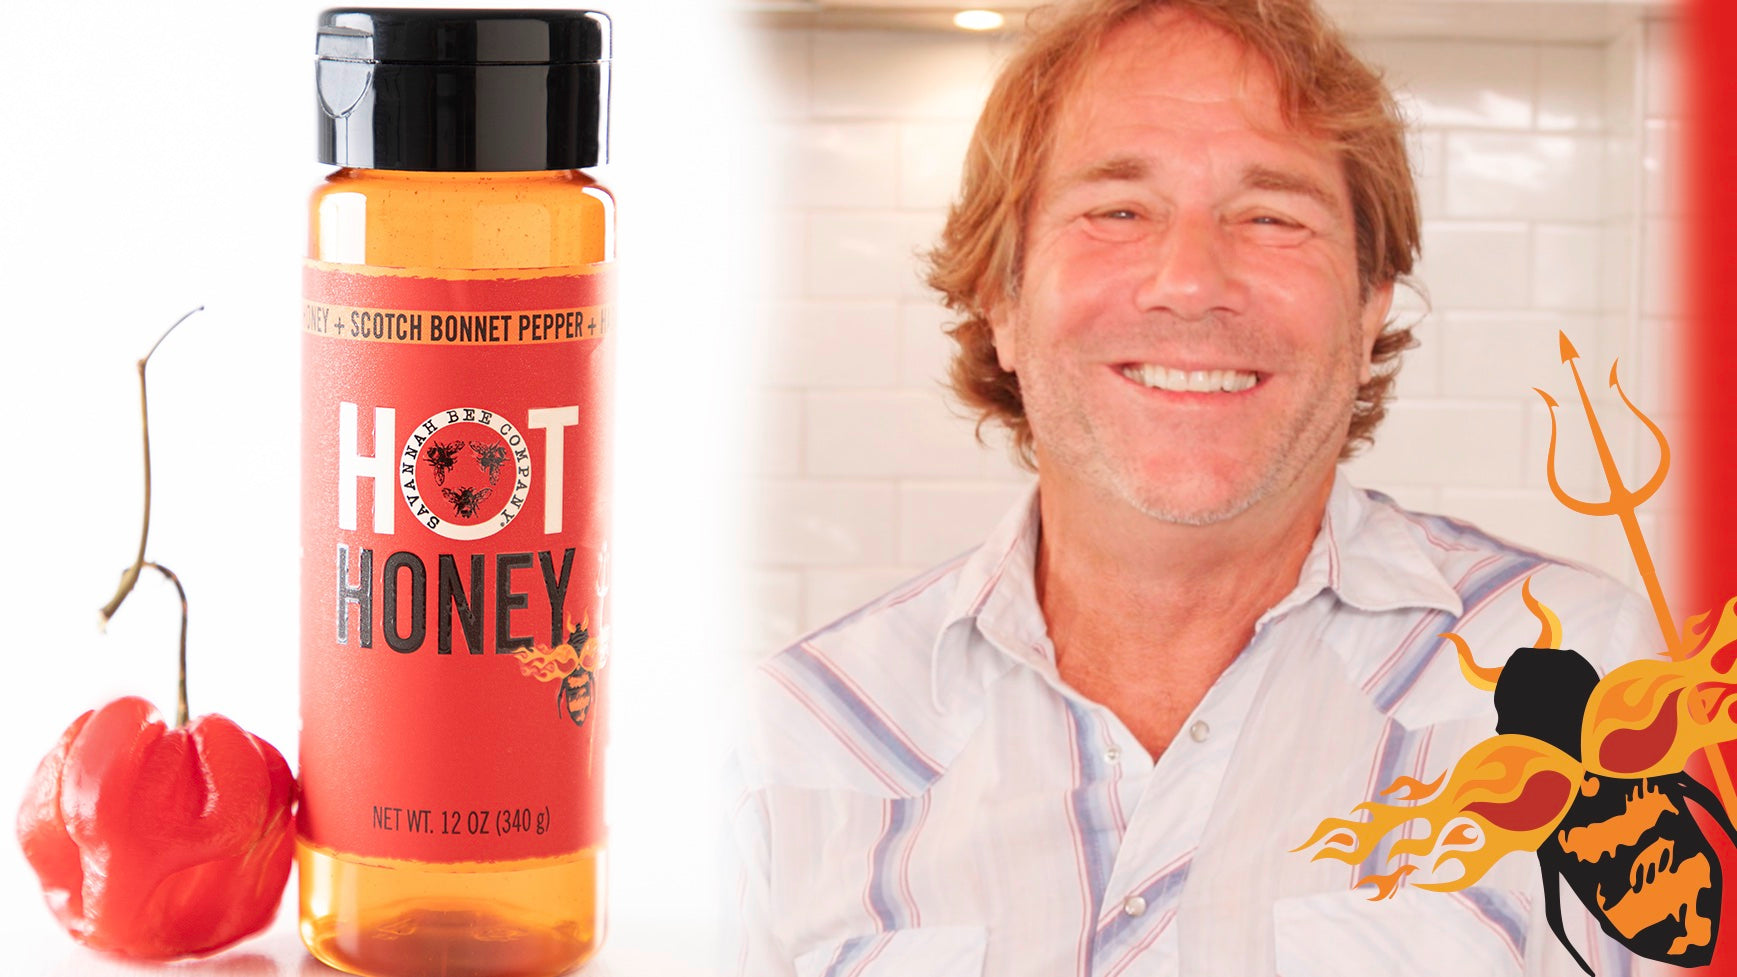 Load video: Hot Honey Squeeze Bottle